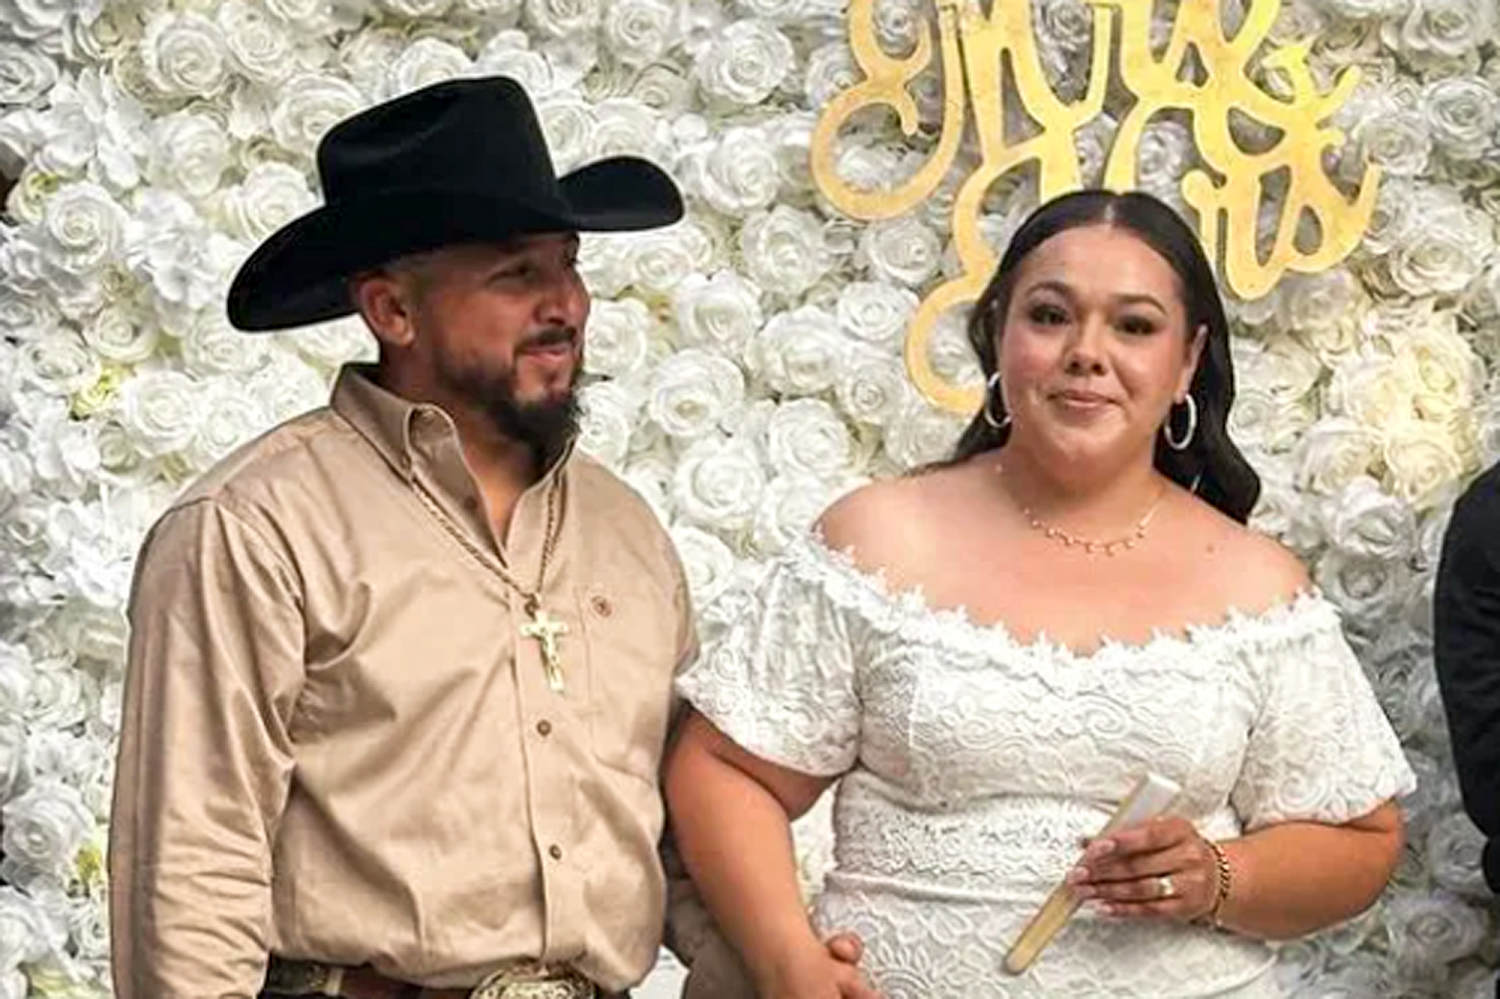 Missouri groom shot in robbery during his backyard wedding